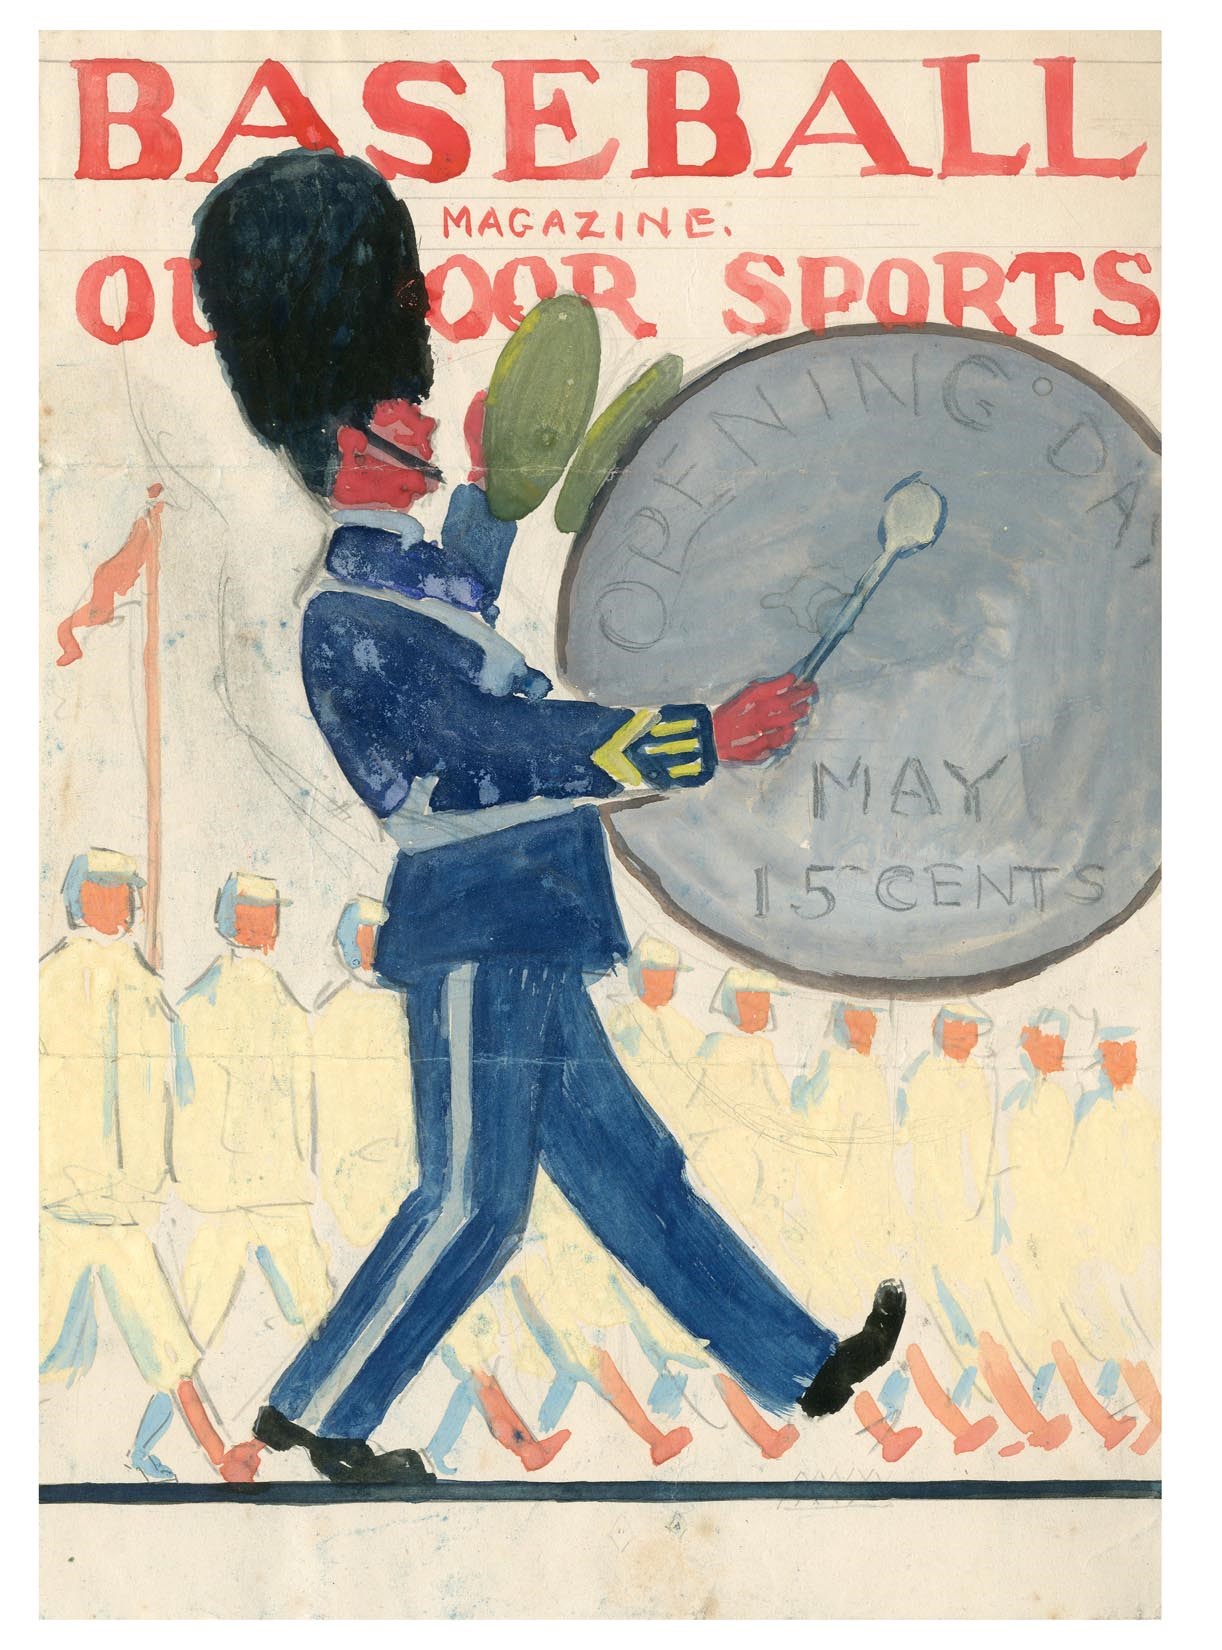 The Baseball Magazine Original Art - 1912 "Opening Day" Baseball Magazine Cover Art Study by Gerrit Beneker (1882-1934)